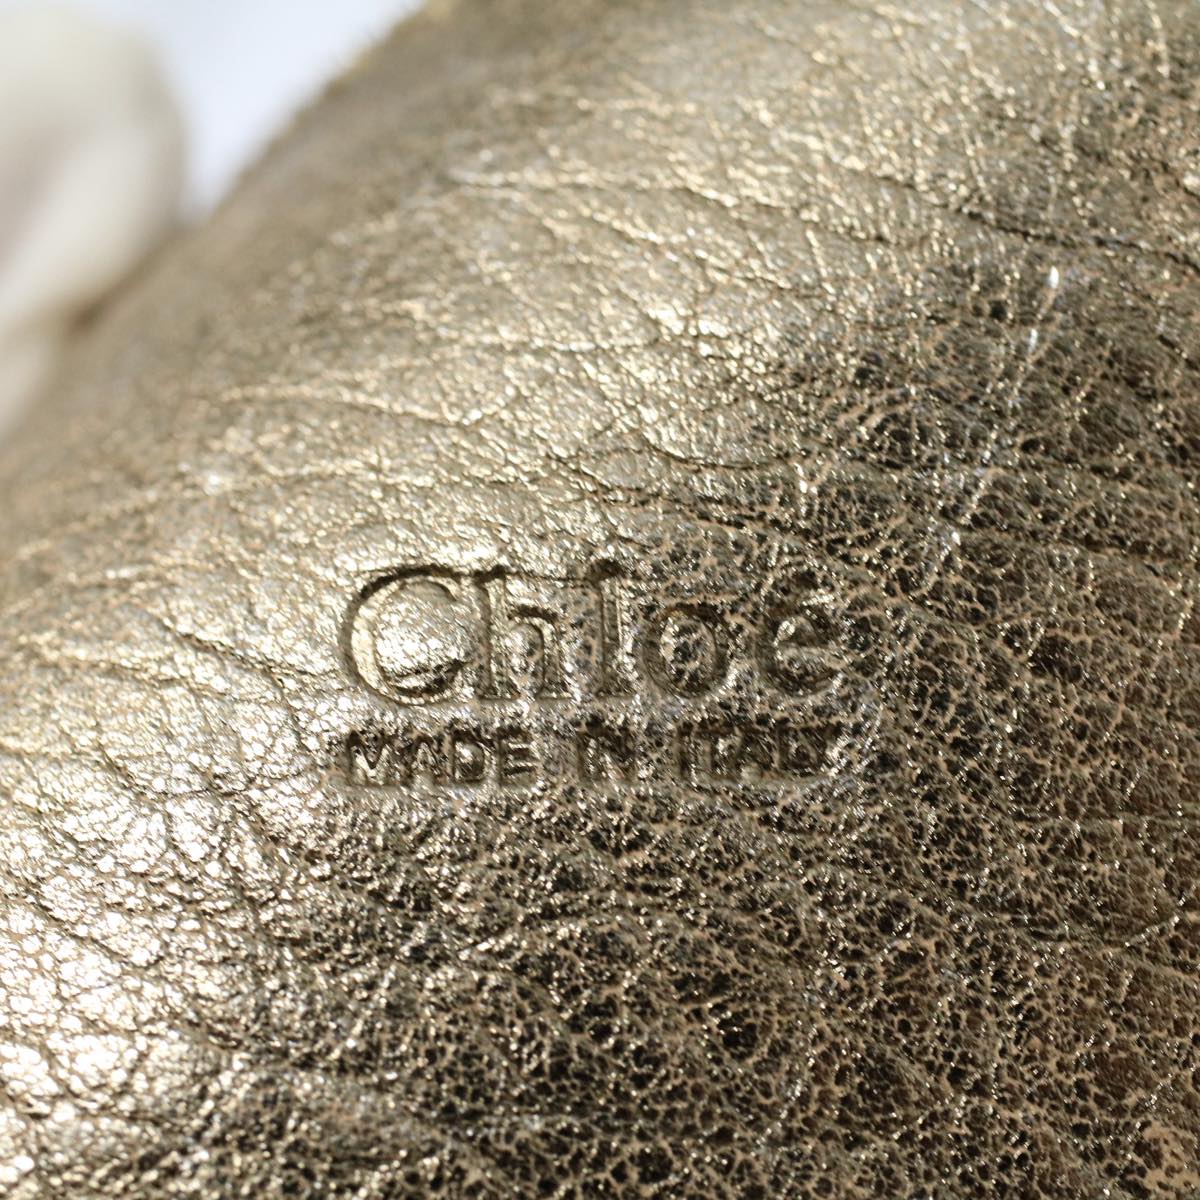 Chloe Shoulder Bag Leather Gold Tone Auth ar10282